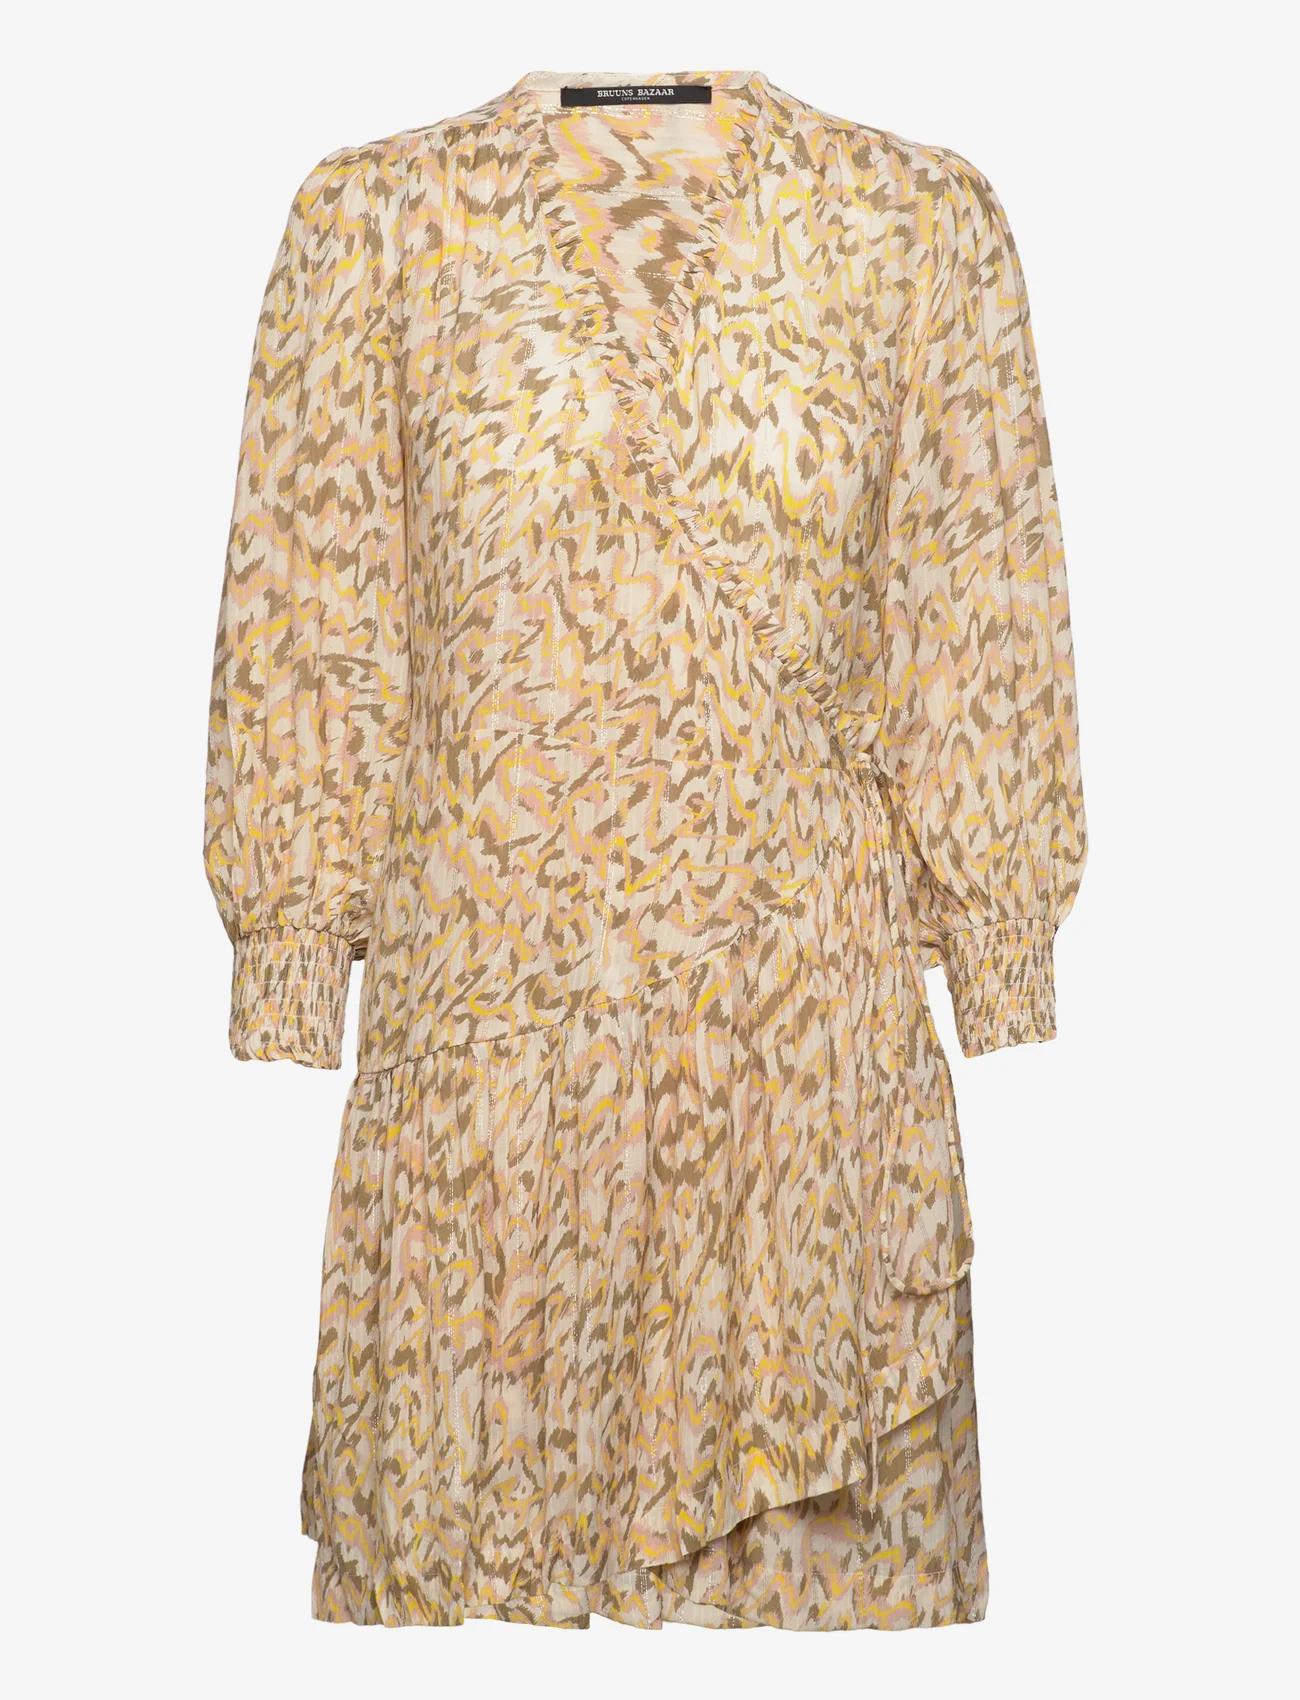 Bruuns Bazaar - HasselBBNaimas dress - sommerkjoler - olive print - 0